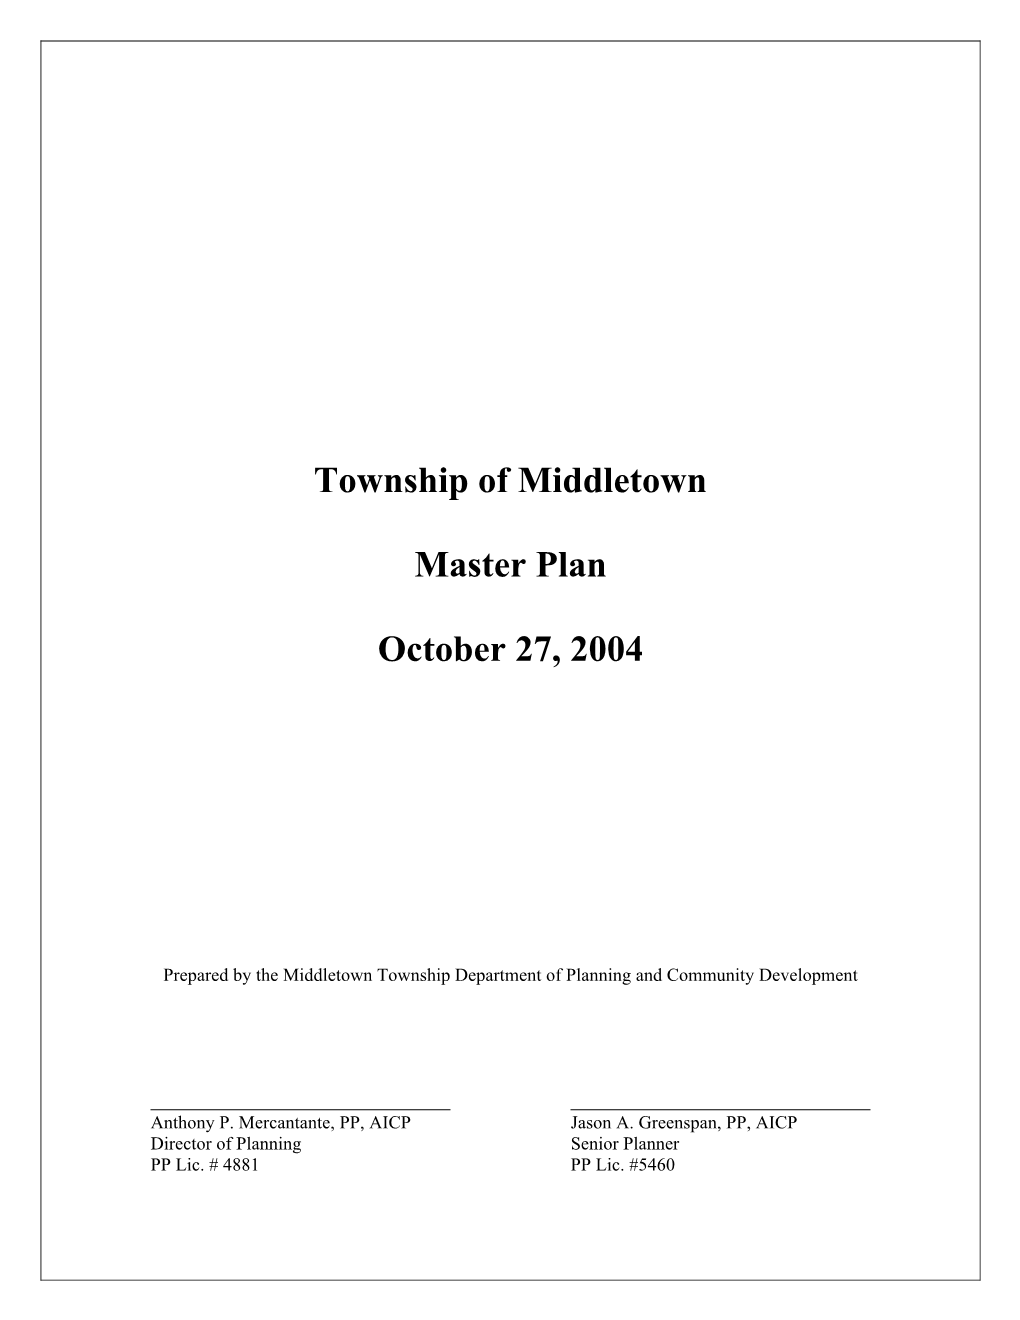 Township of Middletown Master Plan October 27, 2004